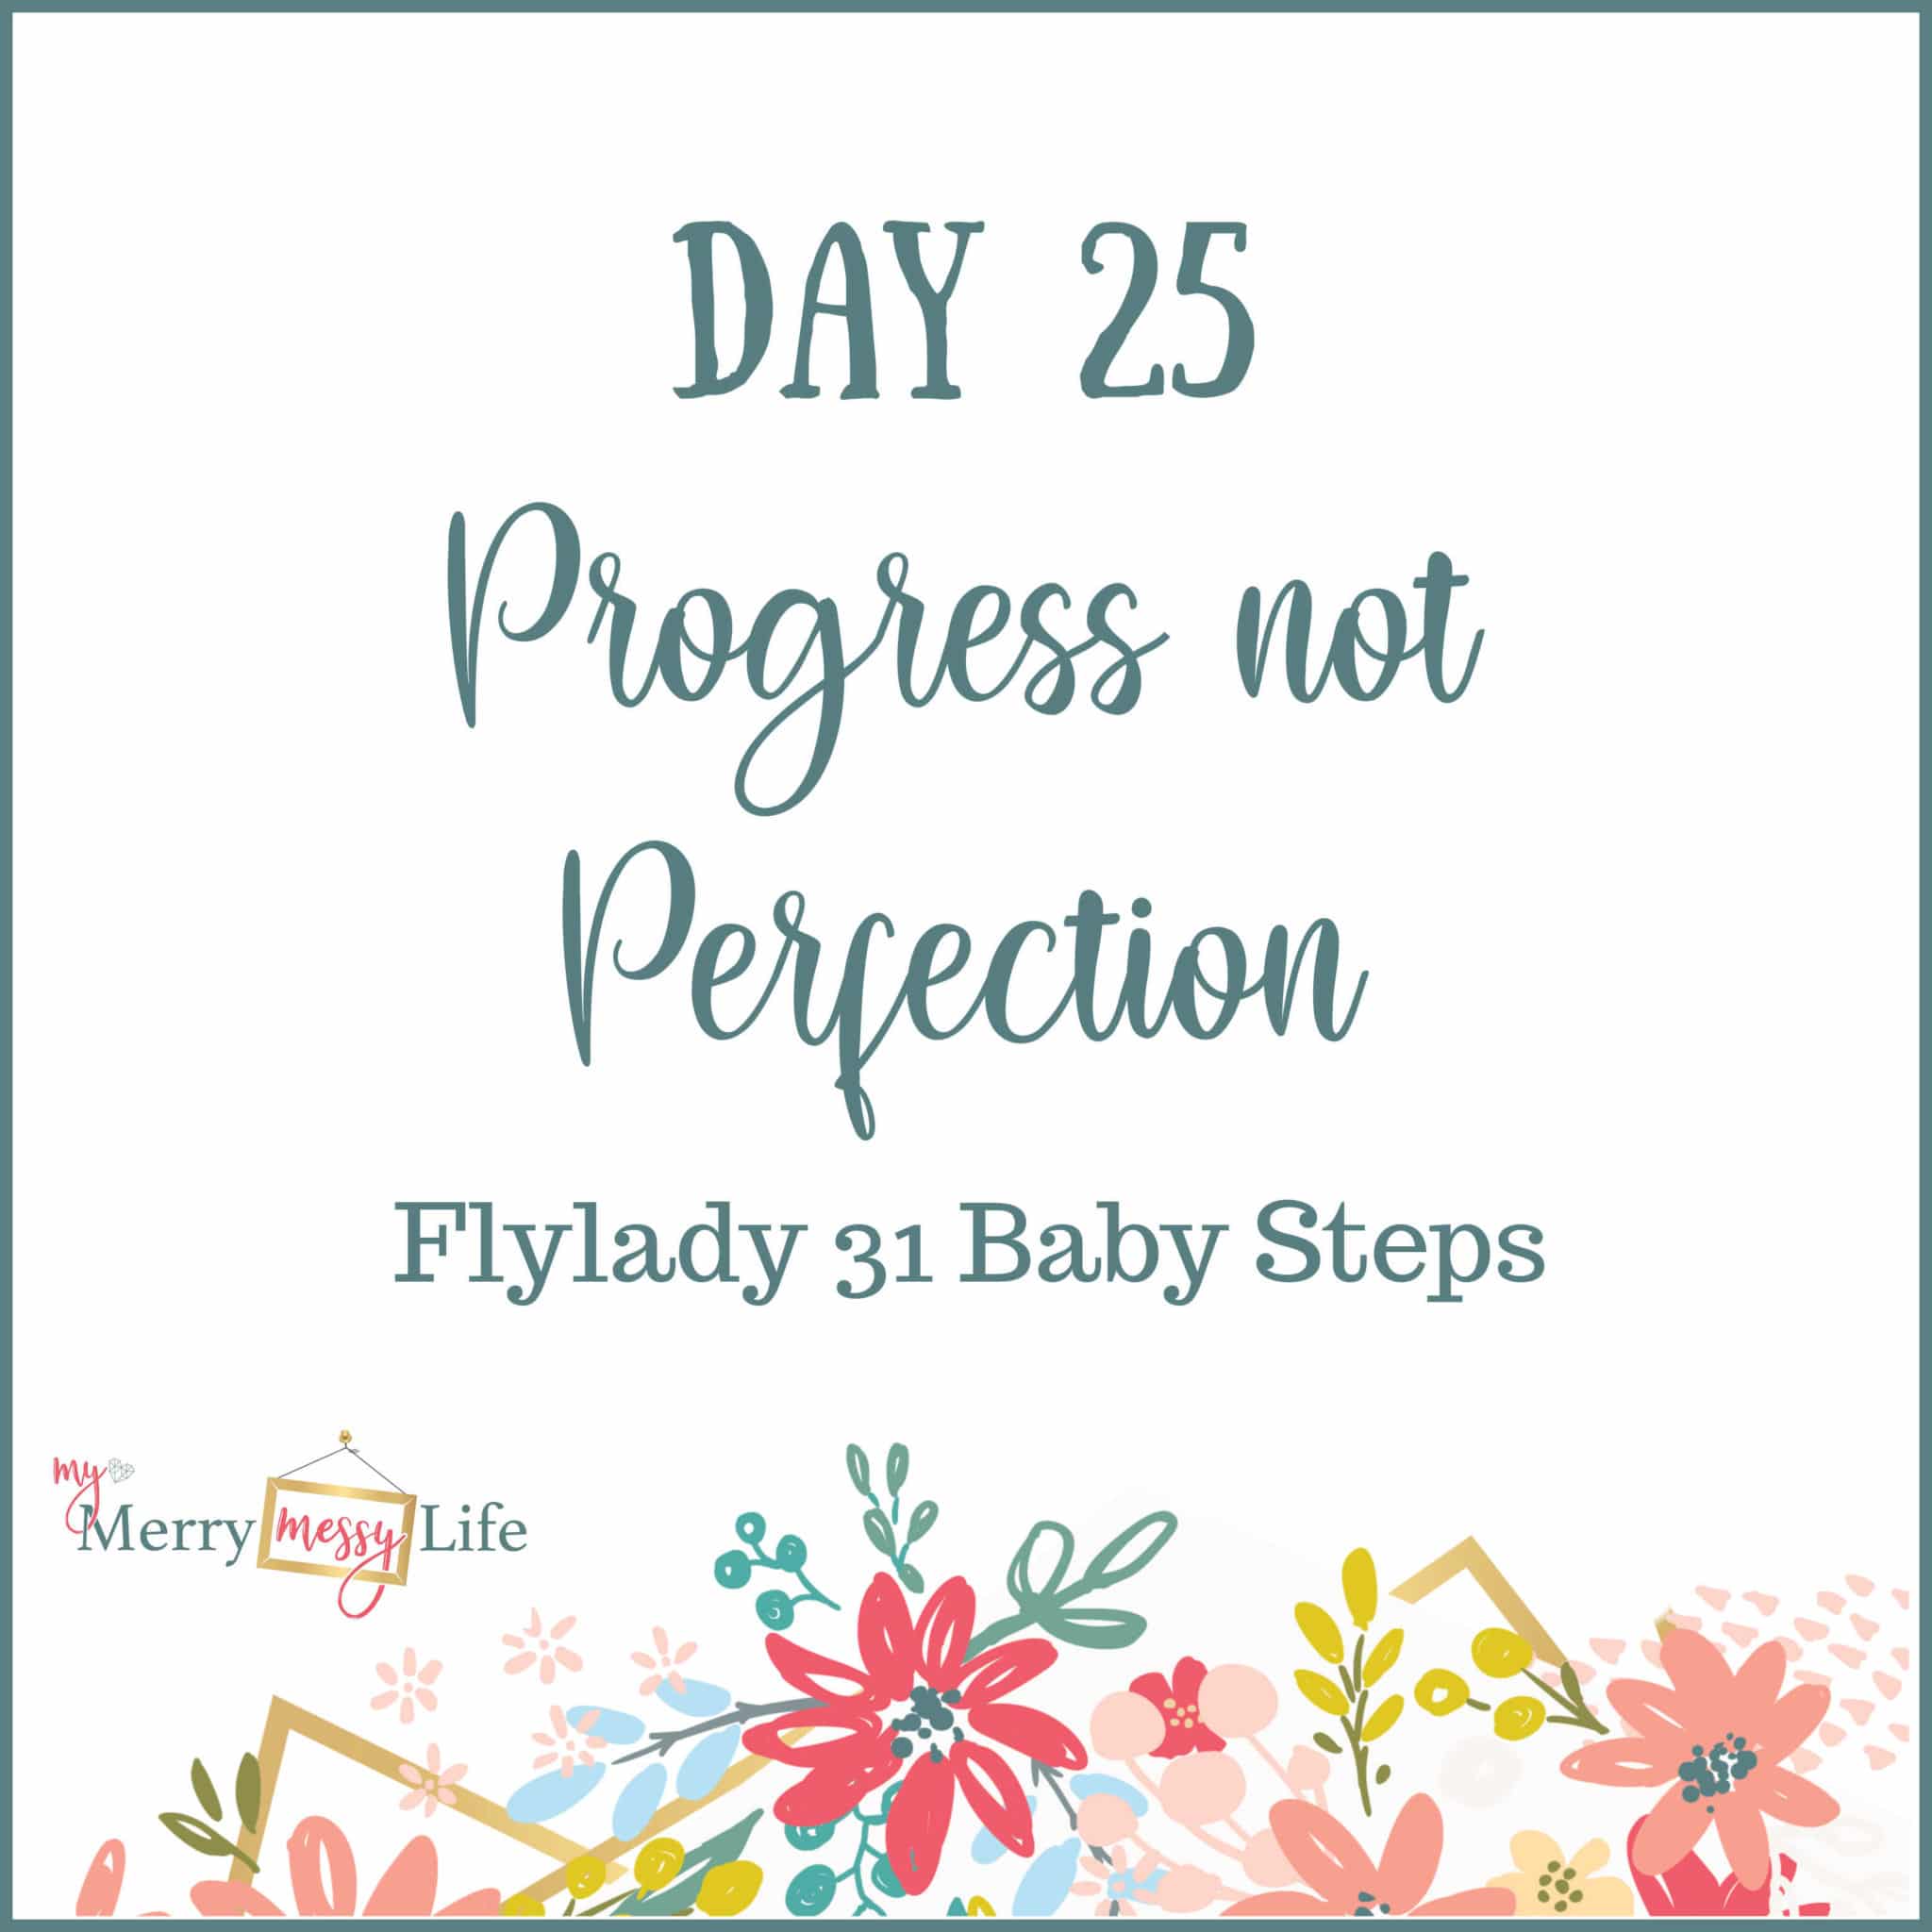 Flylady 31 Baby Steps - Day 25 - Progress Not Perfection